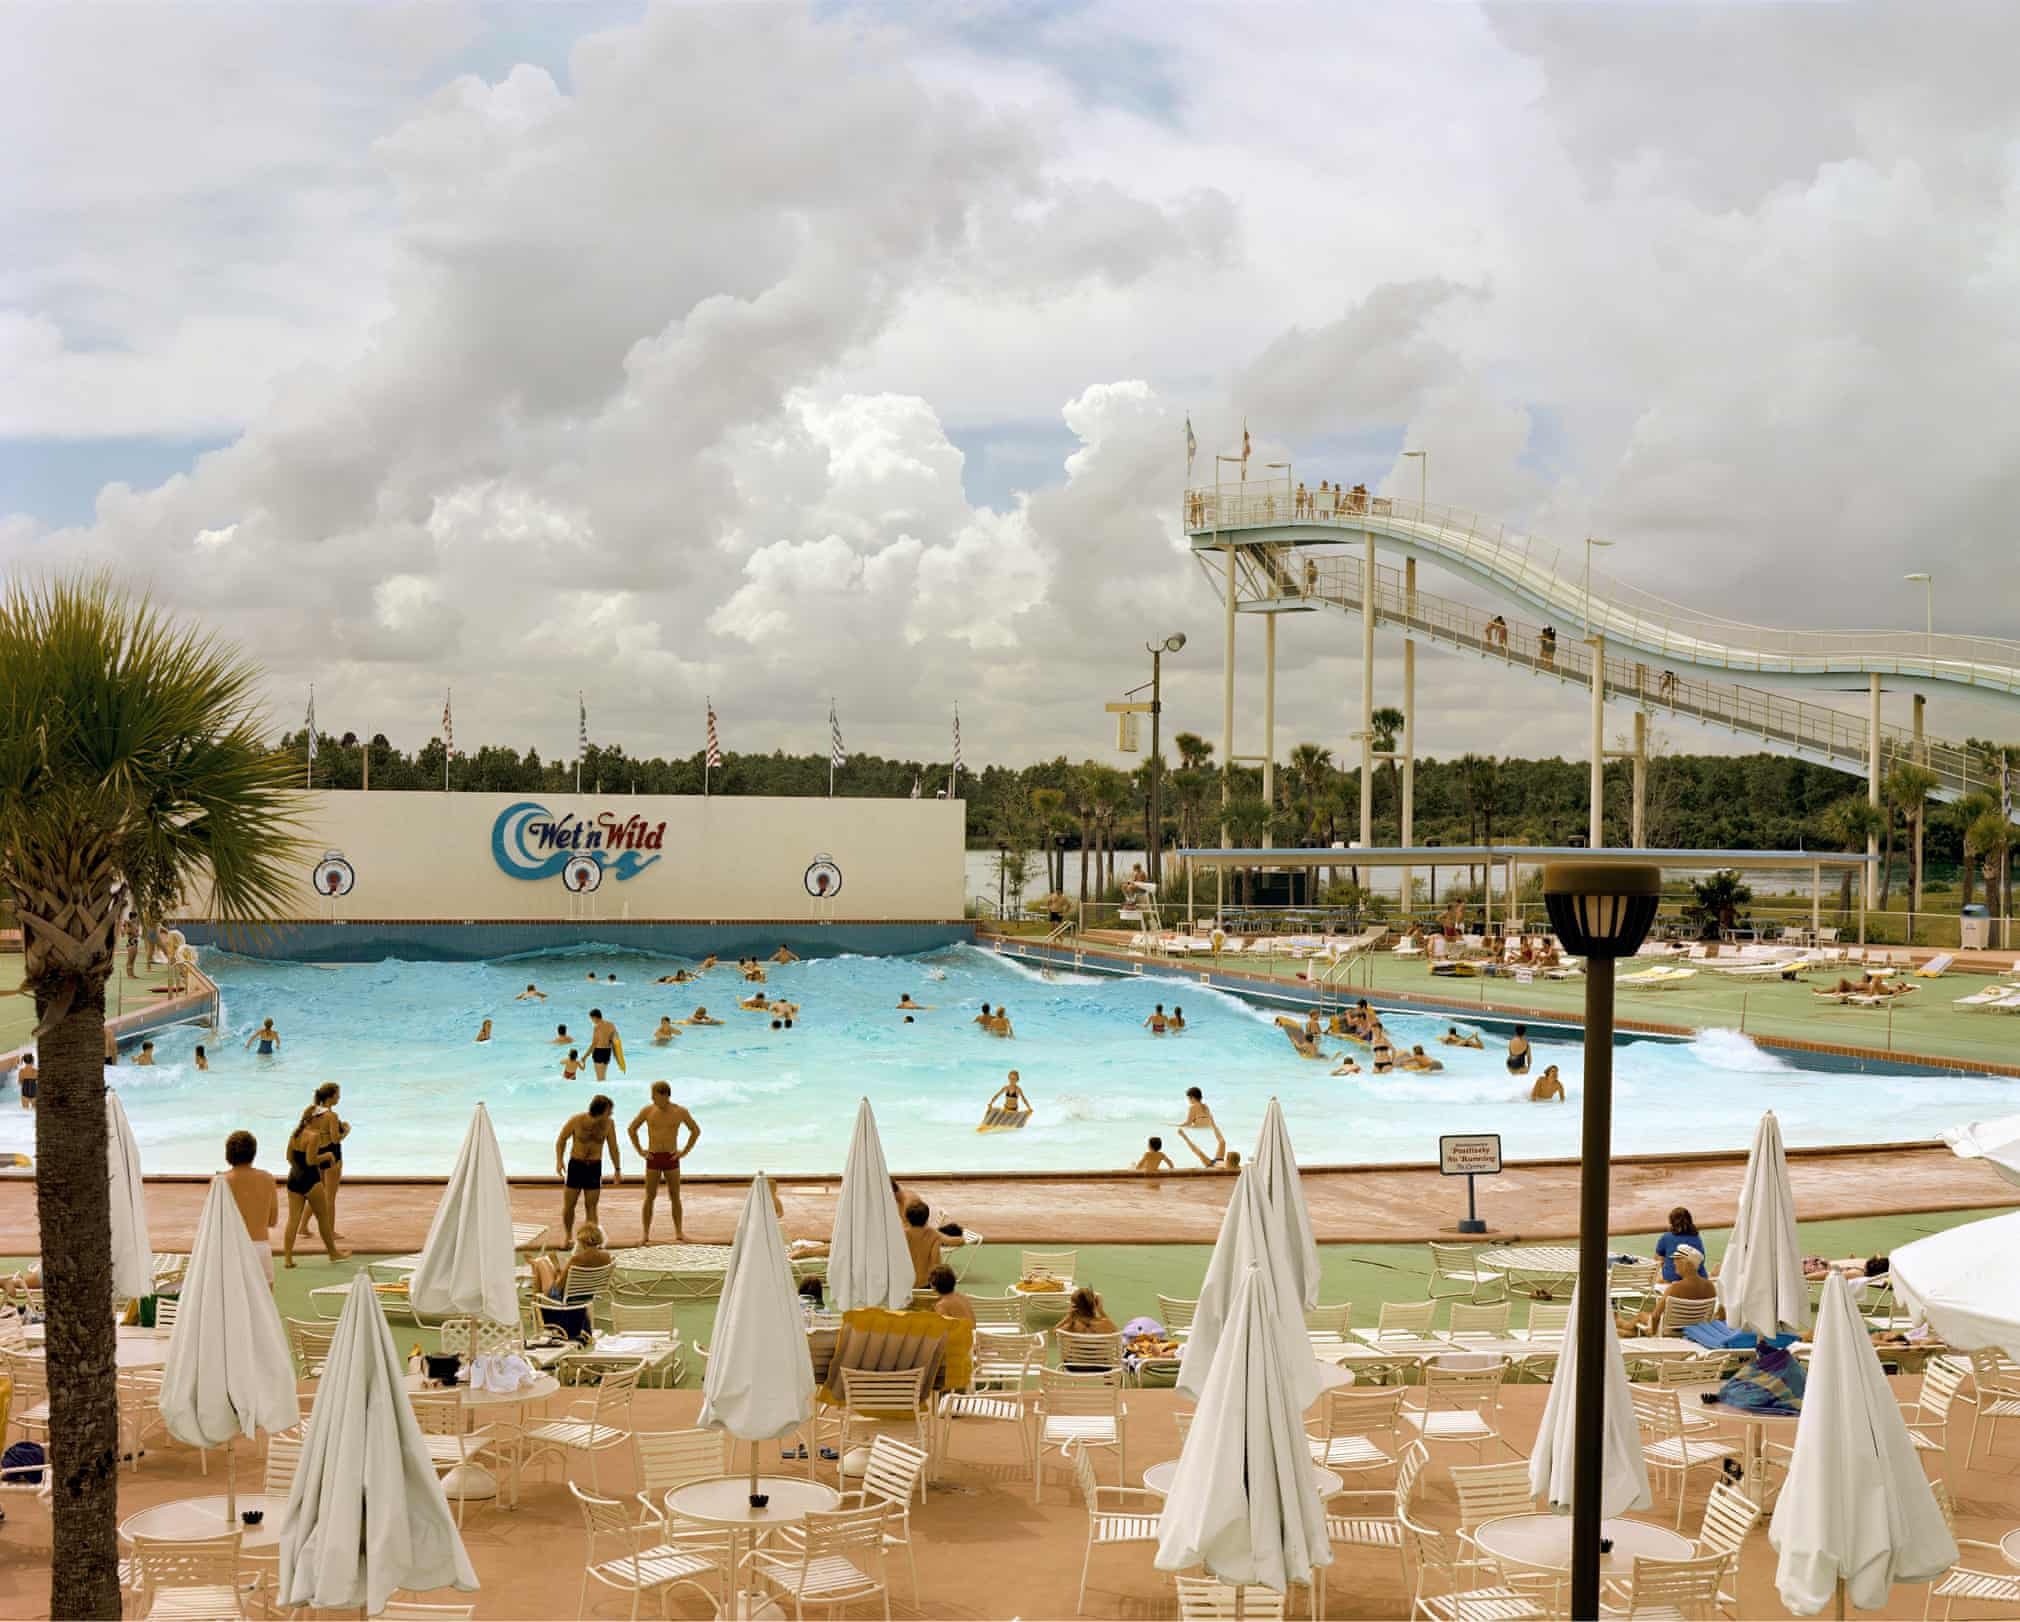 Wet’n’Wild Aquatic Theme Park, Orlando, Florida, September 1980